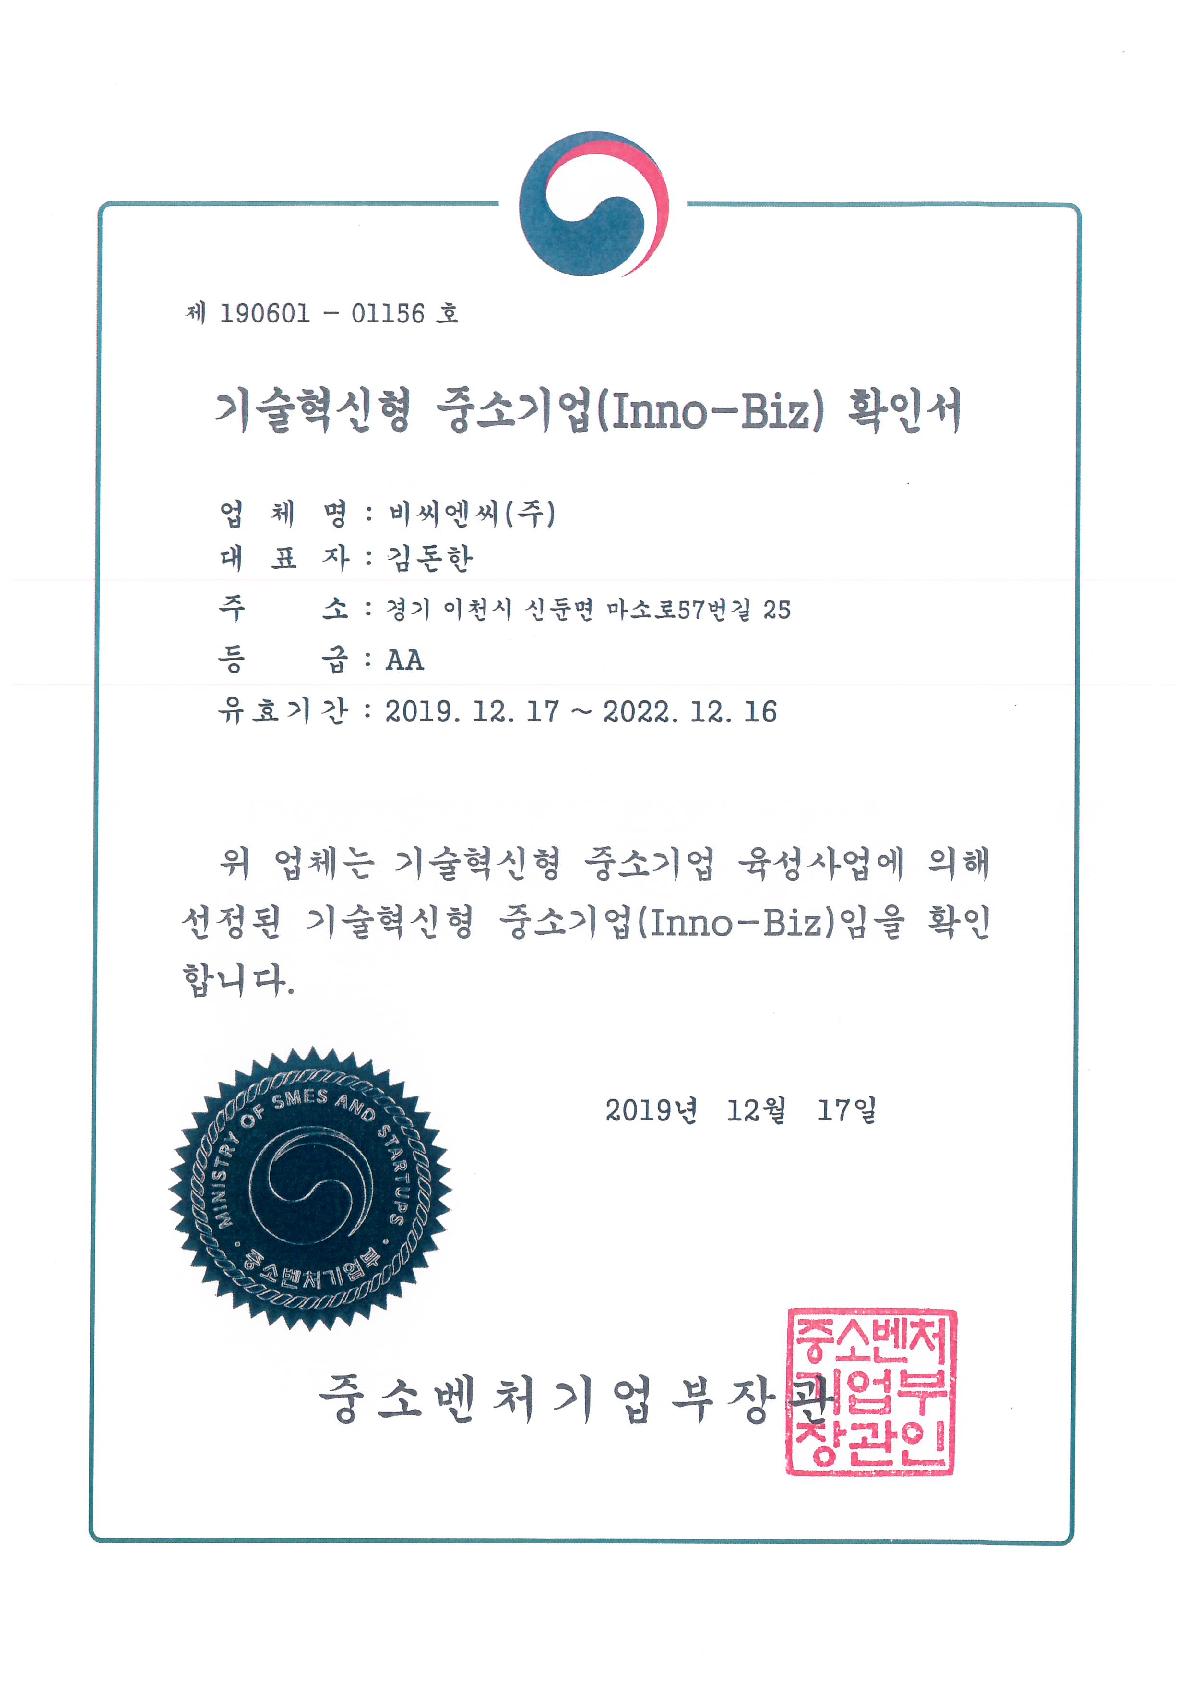 Certificate of Inno-Biz 이미지